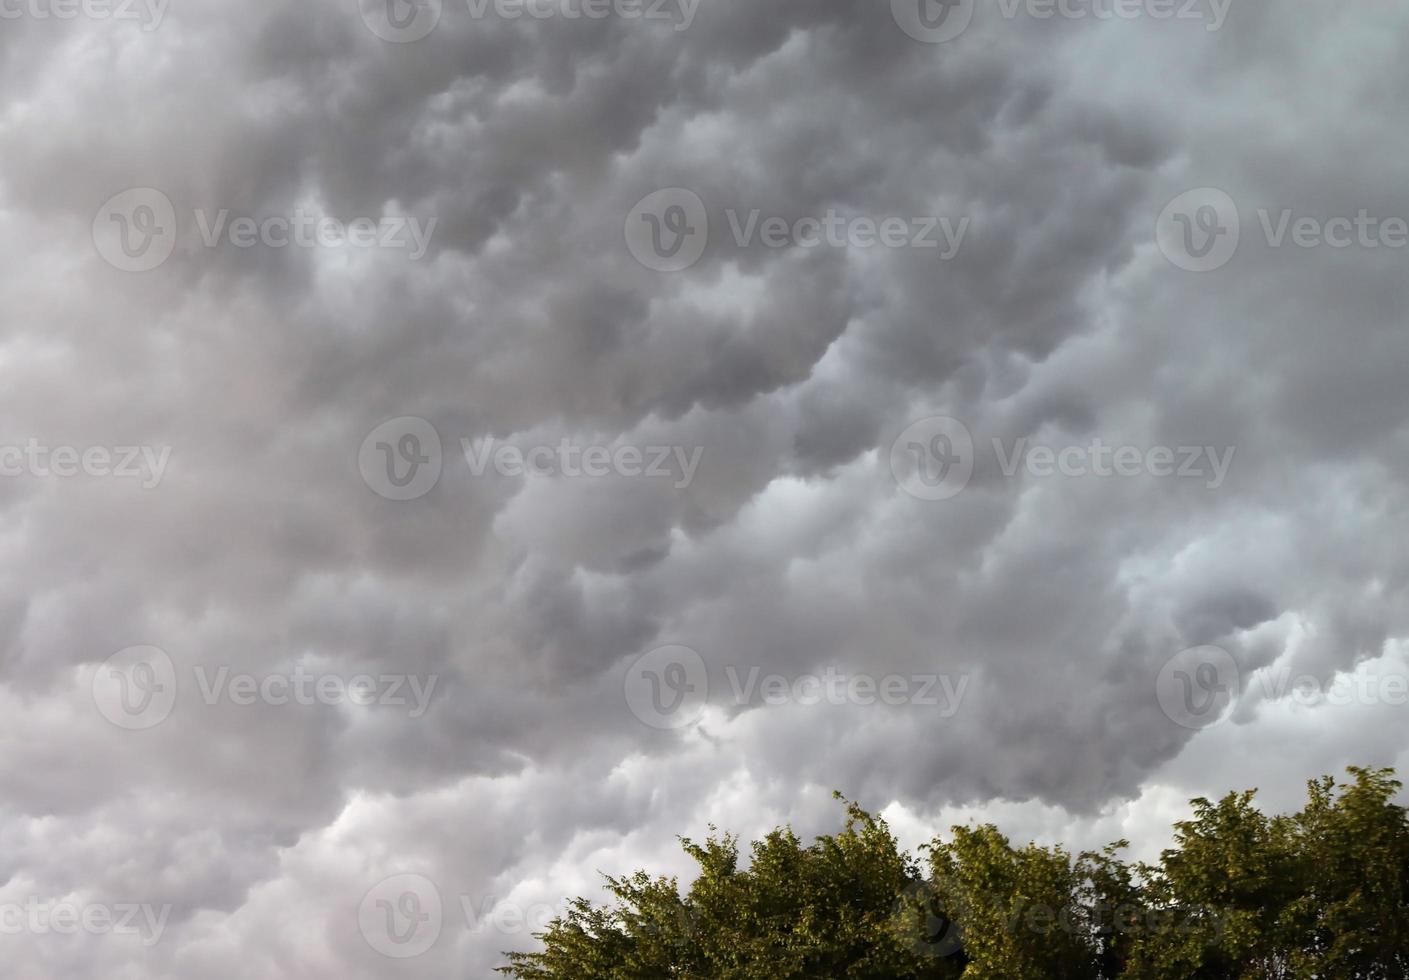 superbes formations de nuages sombres juste avant un orage photo